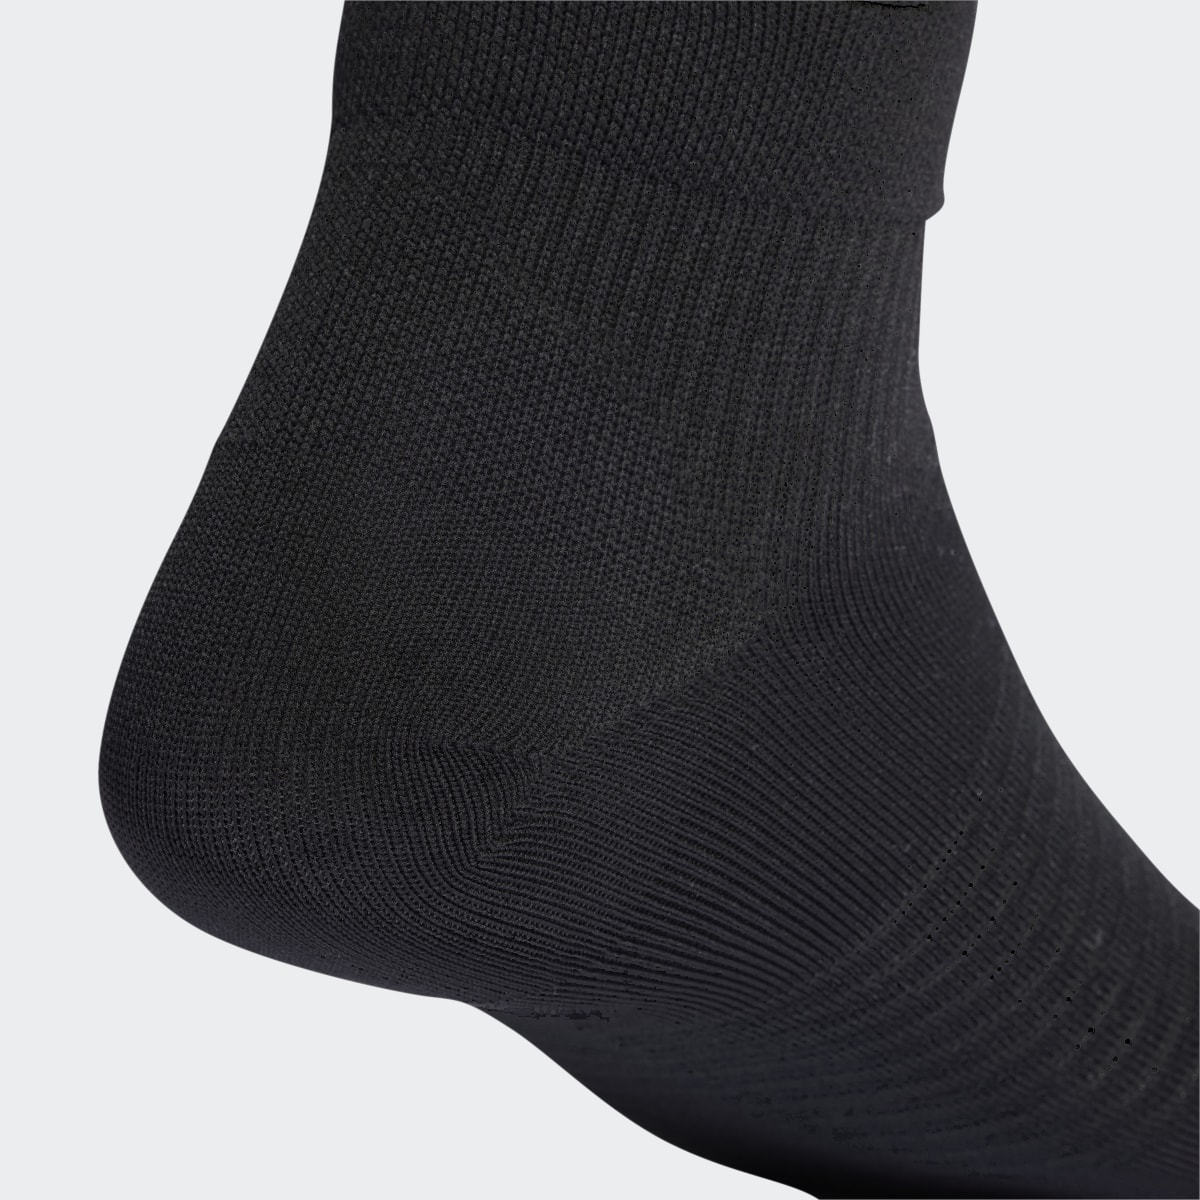 Adidas Performance Designed for Sport Ankle Socks. 3